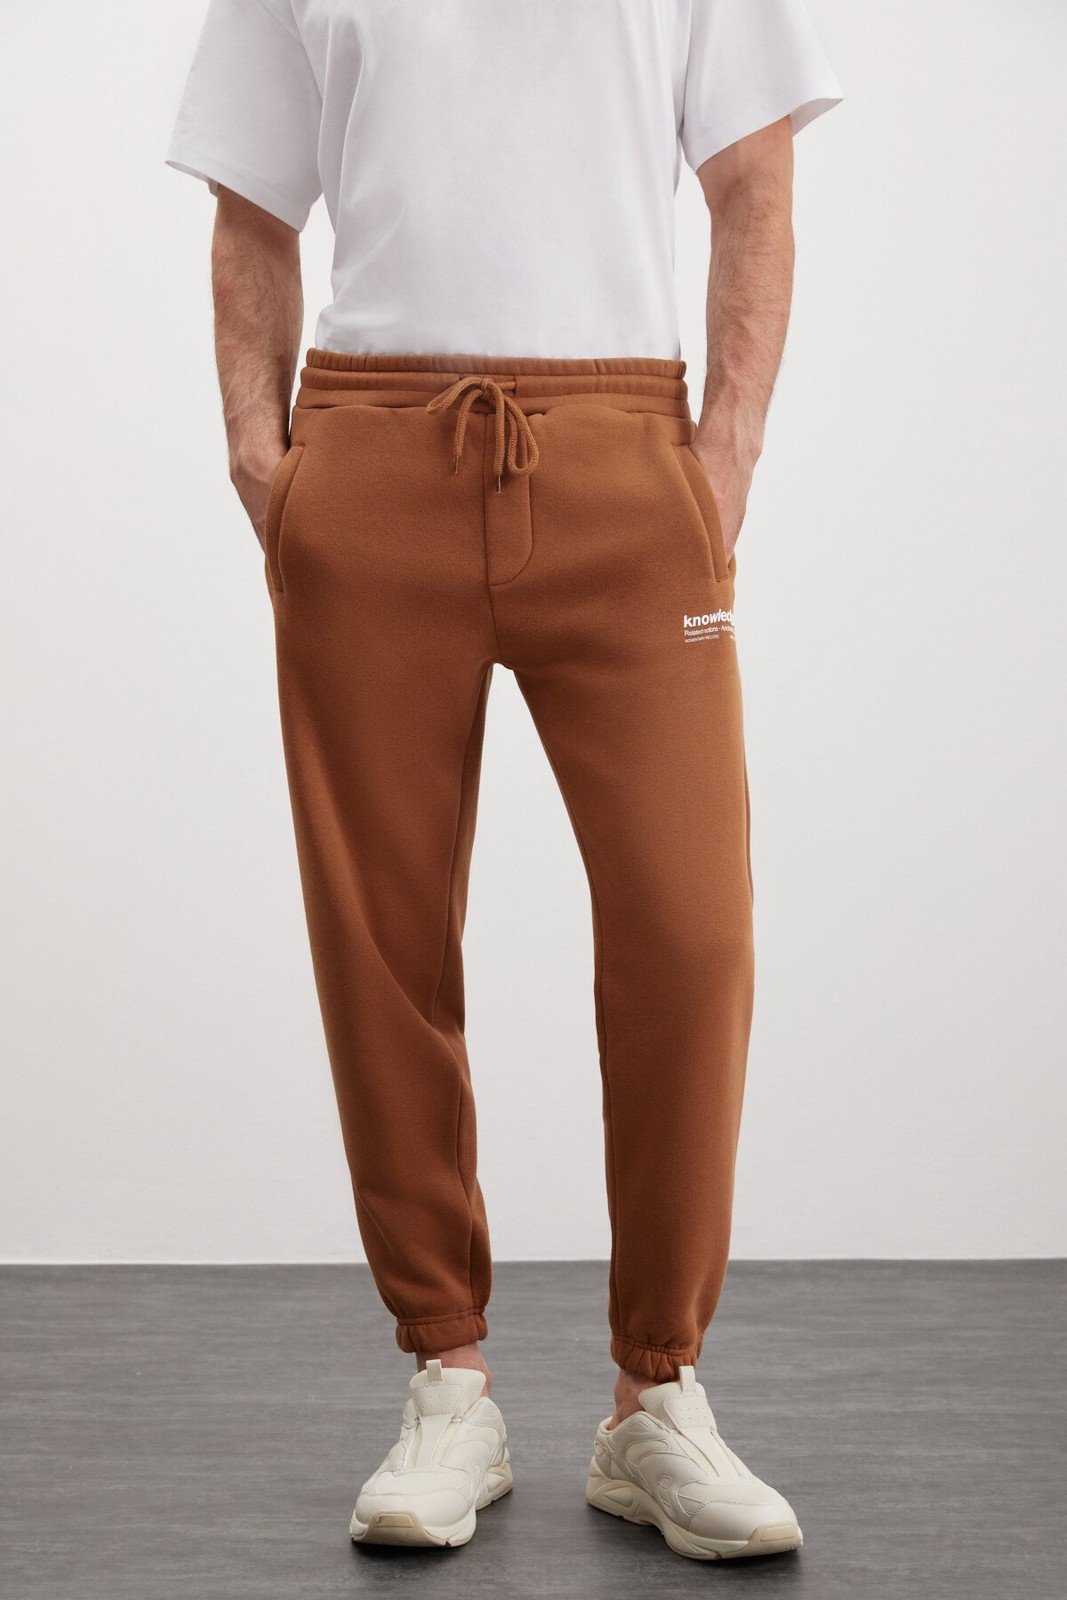 GRIMELANGE Bernon Men's Soft Fabric Three Pocket Light Brown Sweatpants with Elastic Le